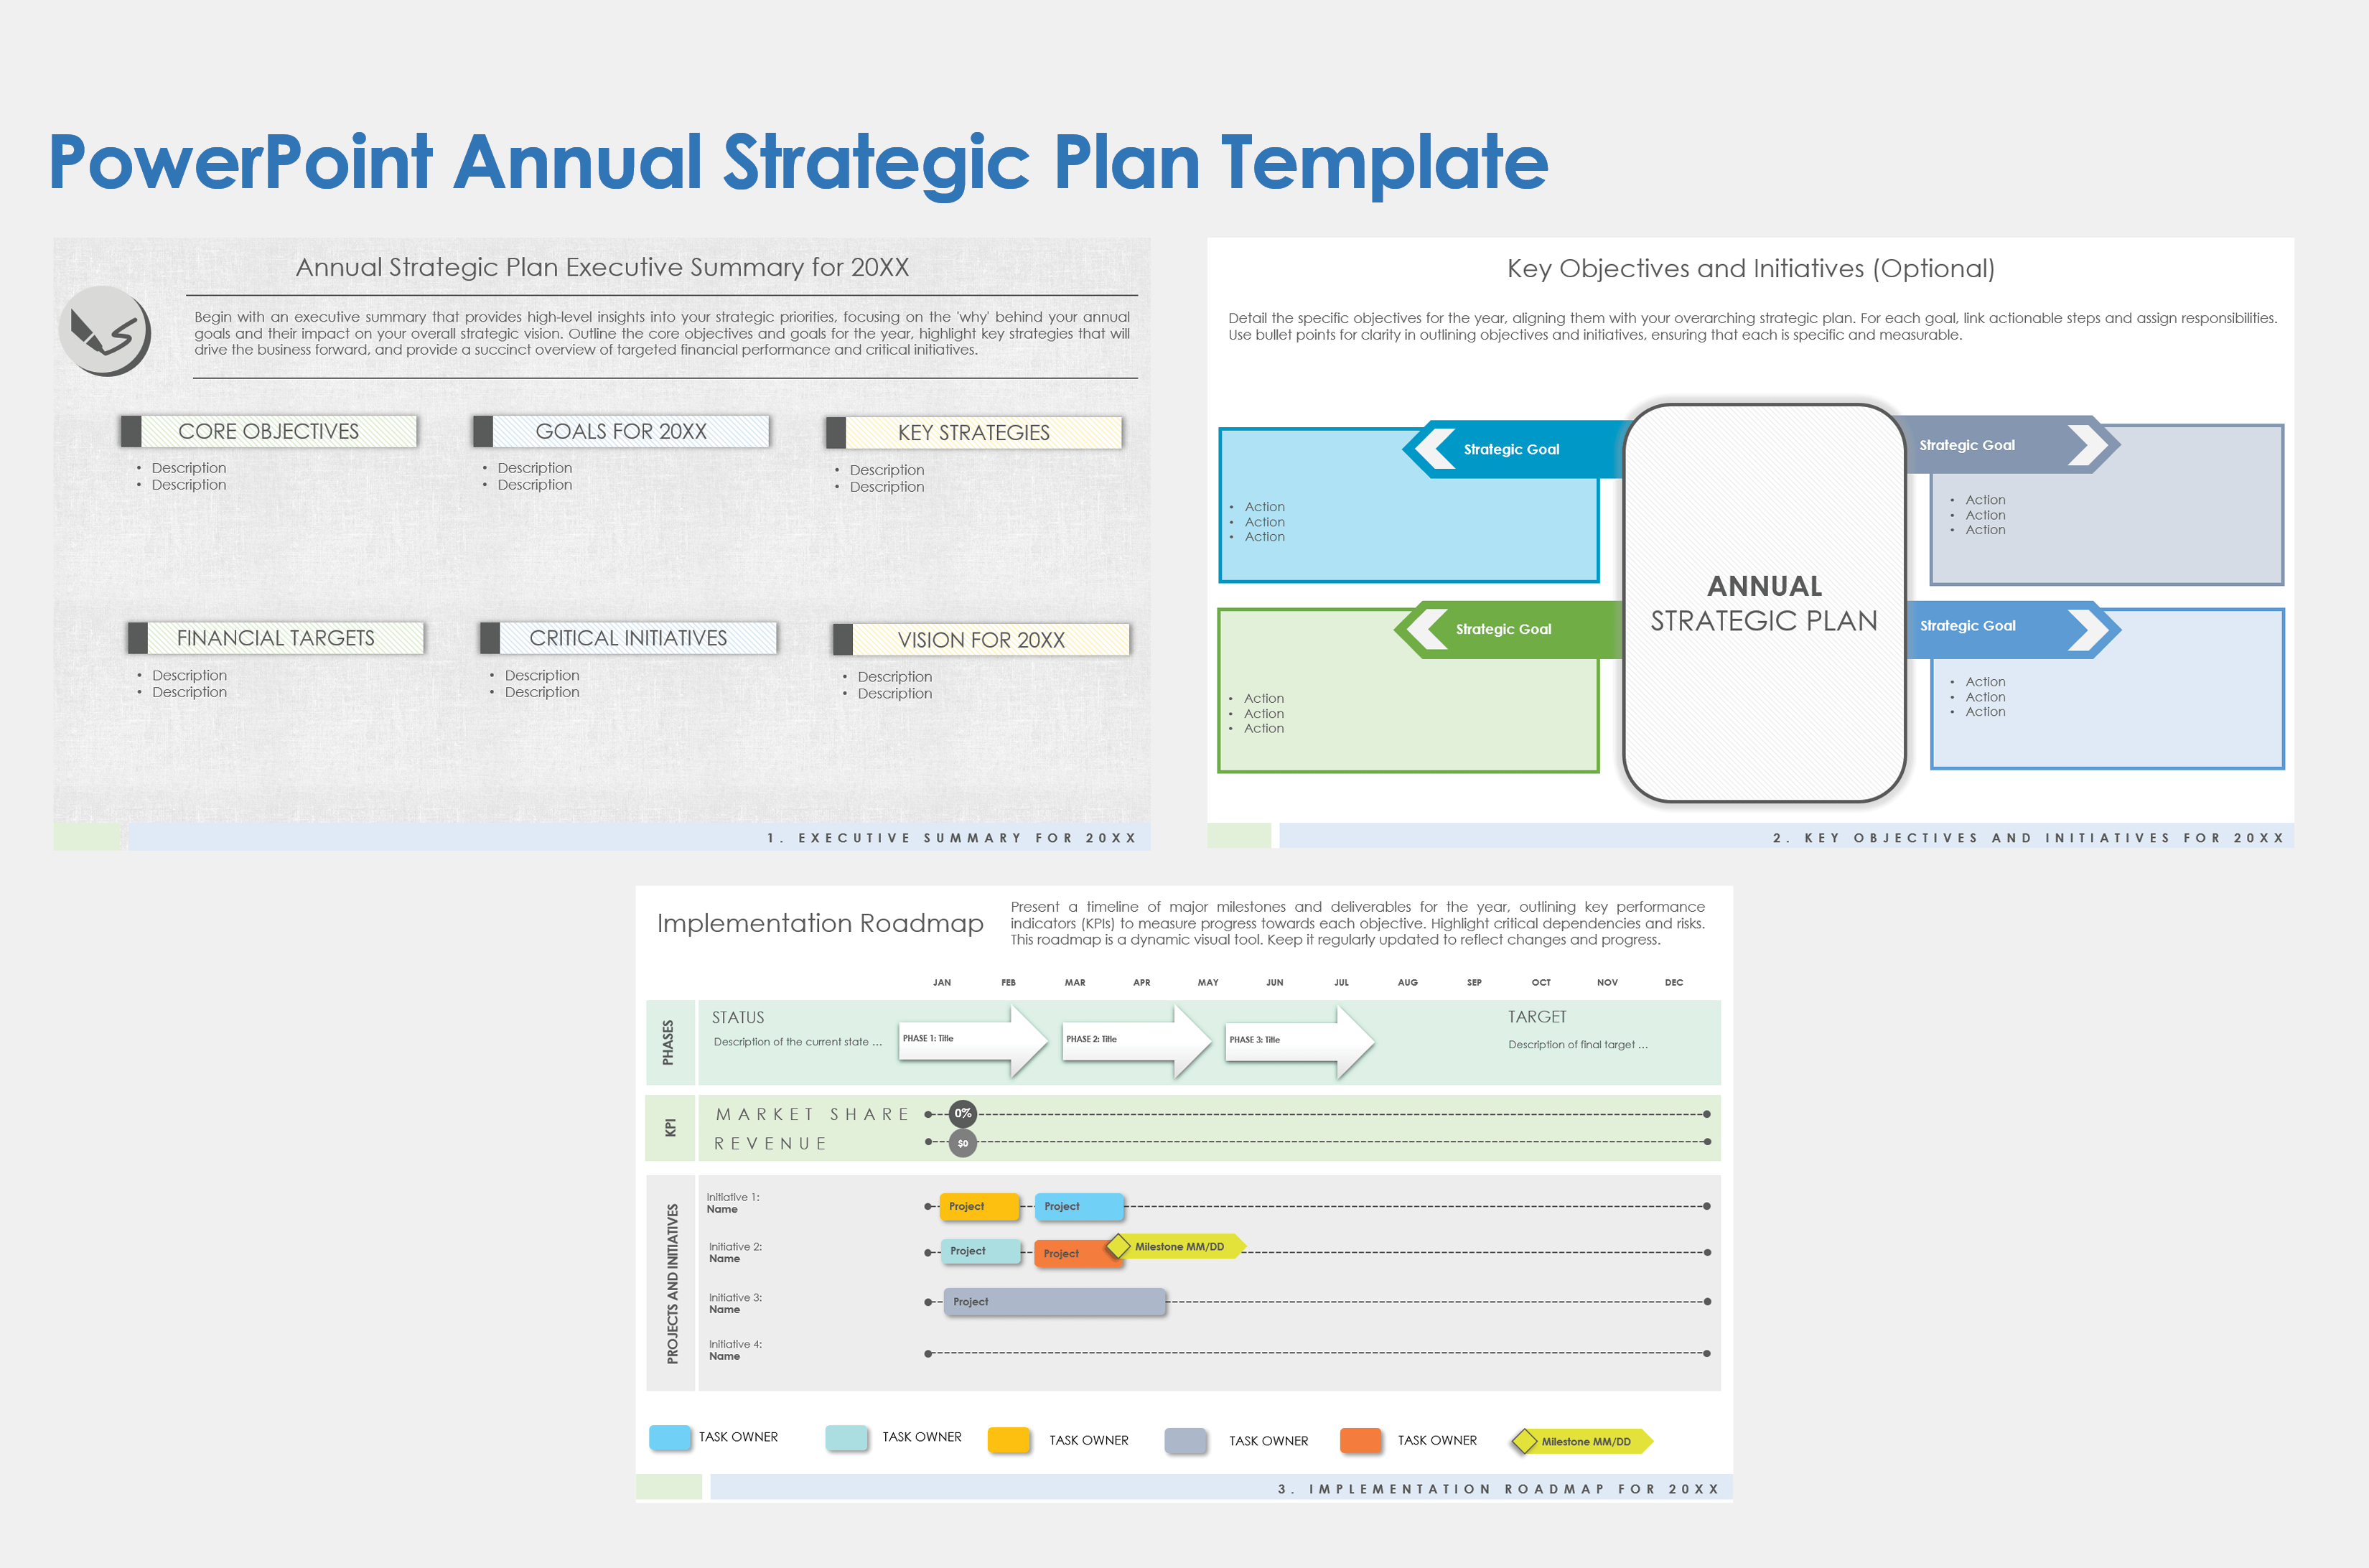 PowerPoint Annual Strategic Plan Template